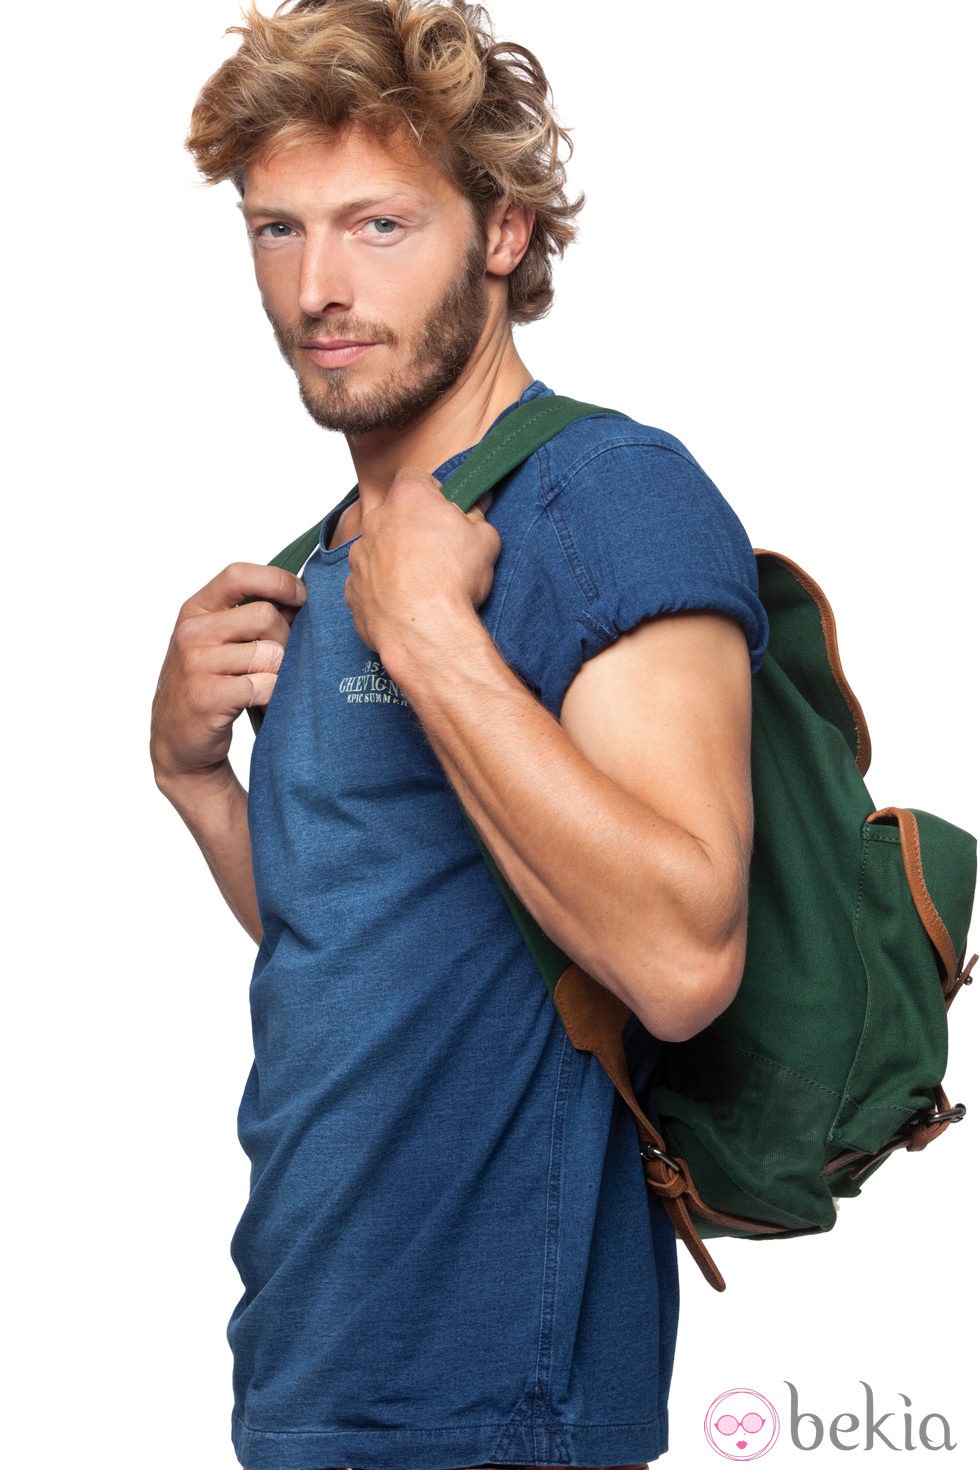 Camiseta azul con mochila verde de la colección verano 2012 de Chevignon